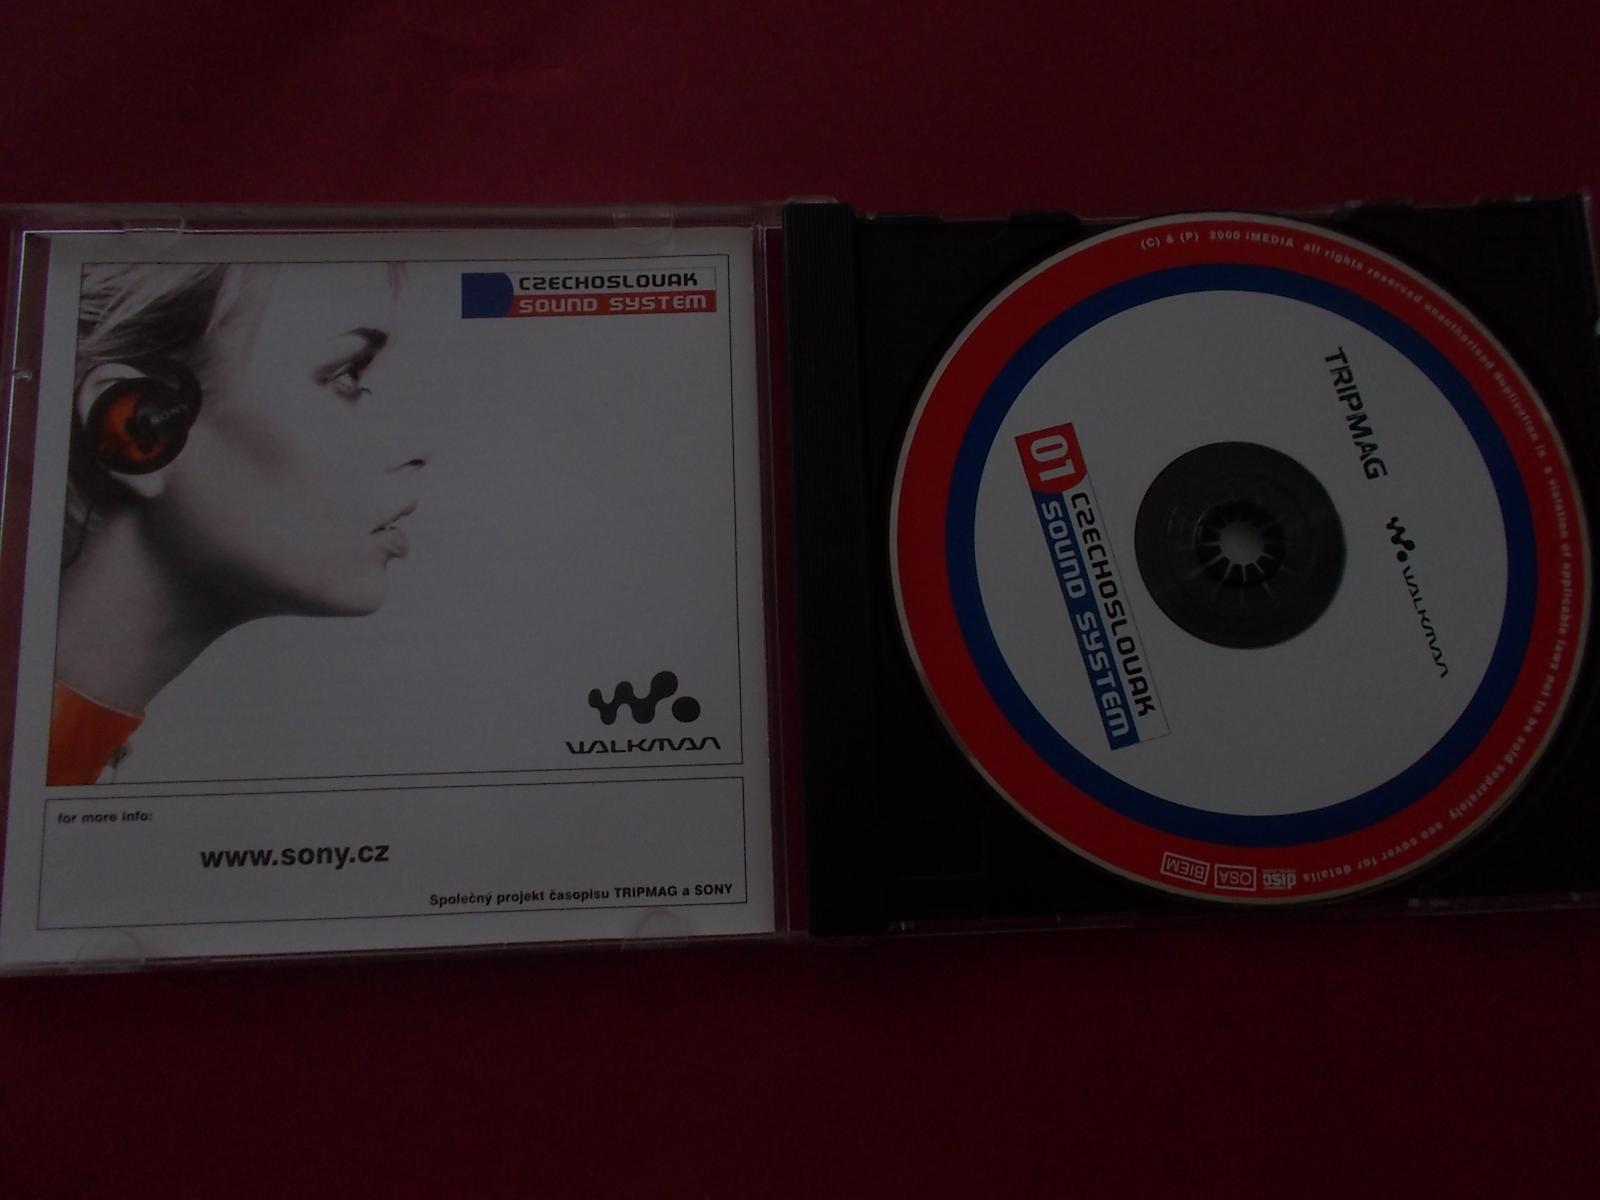 CD Tripmag 01 Czechoslovak Sound System - Hudba